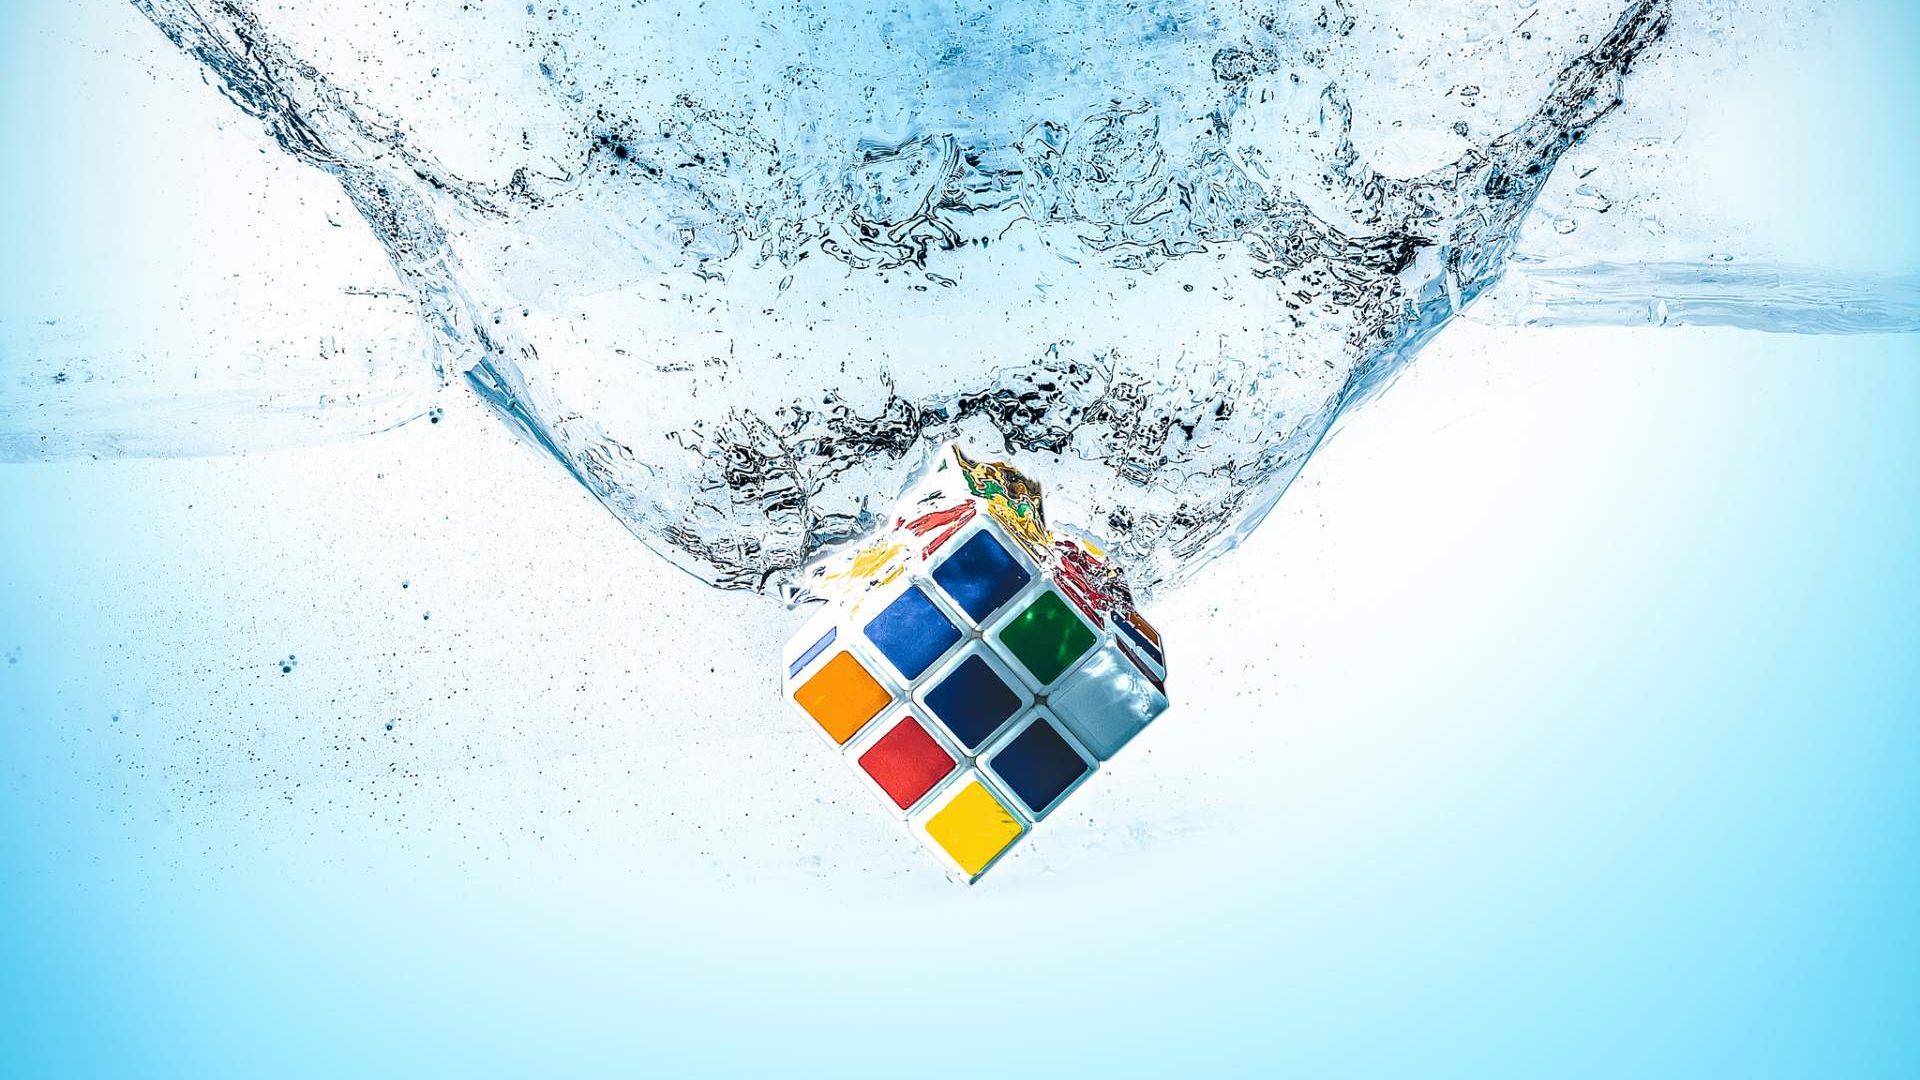 Wallpaper Rubick's cube in water